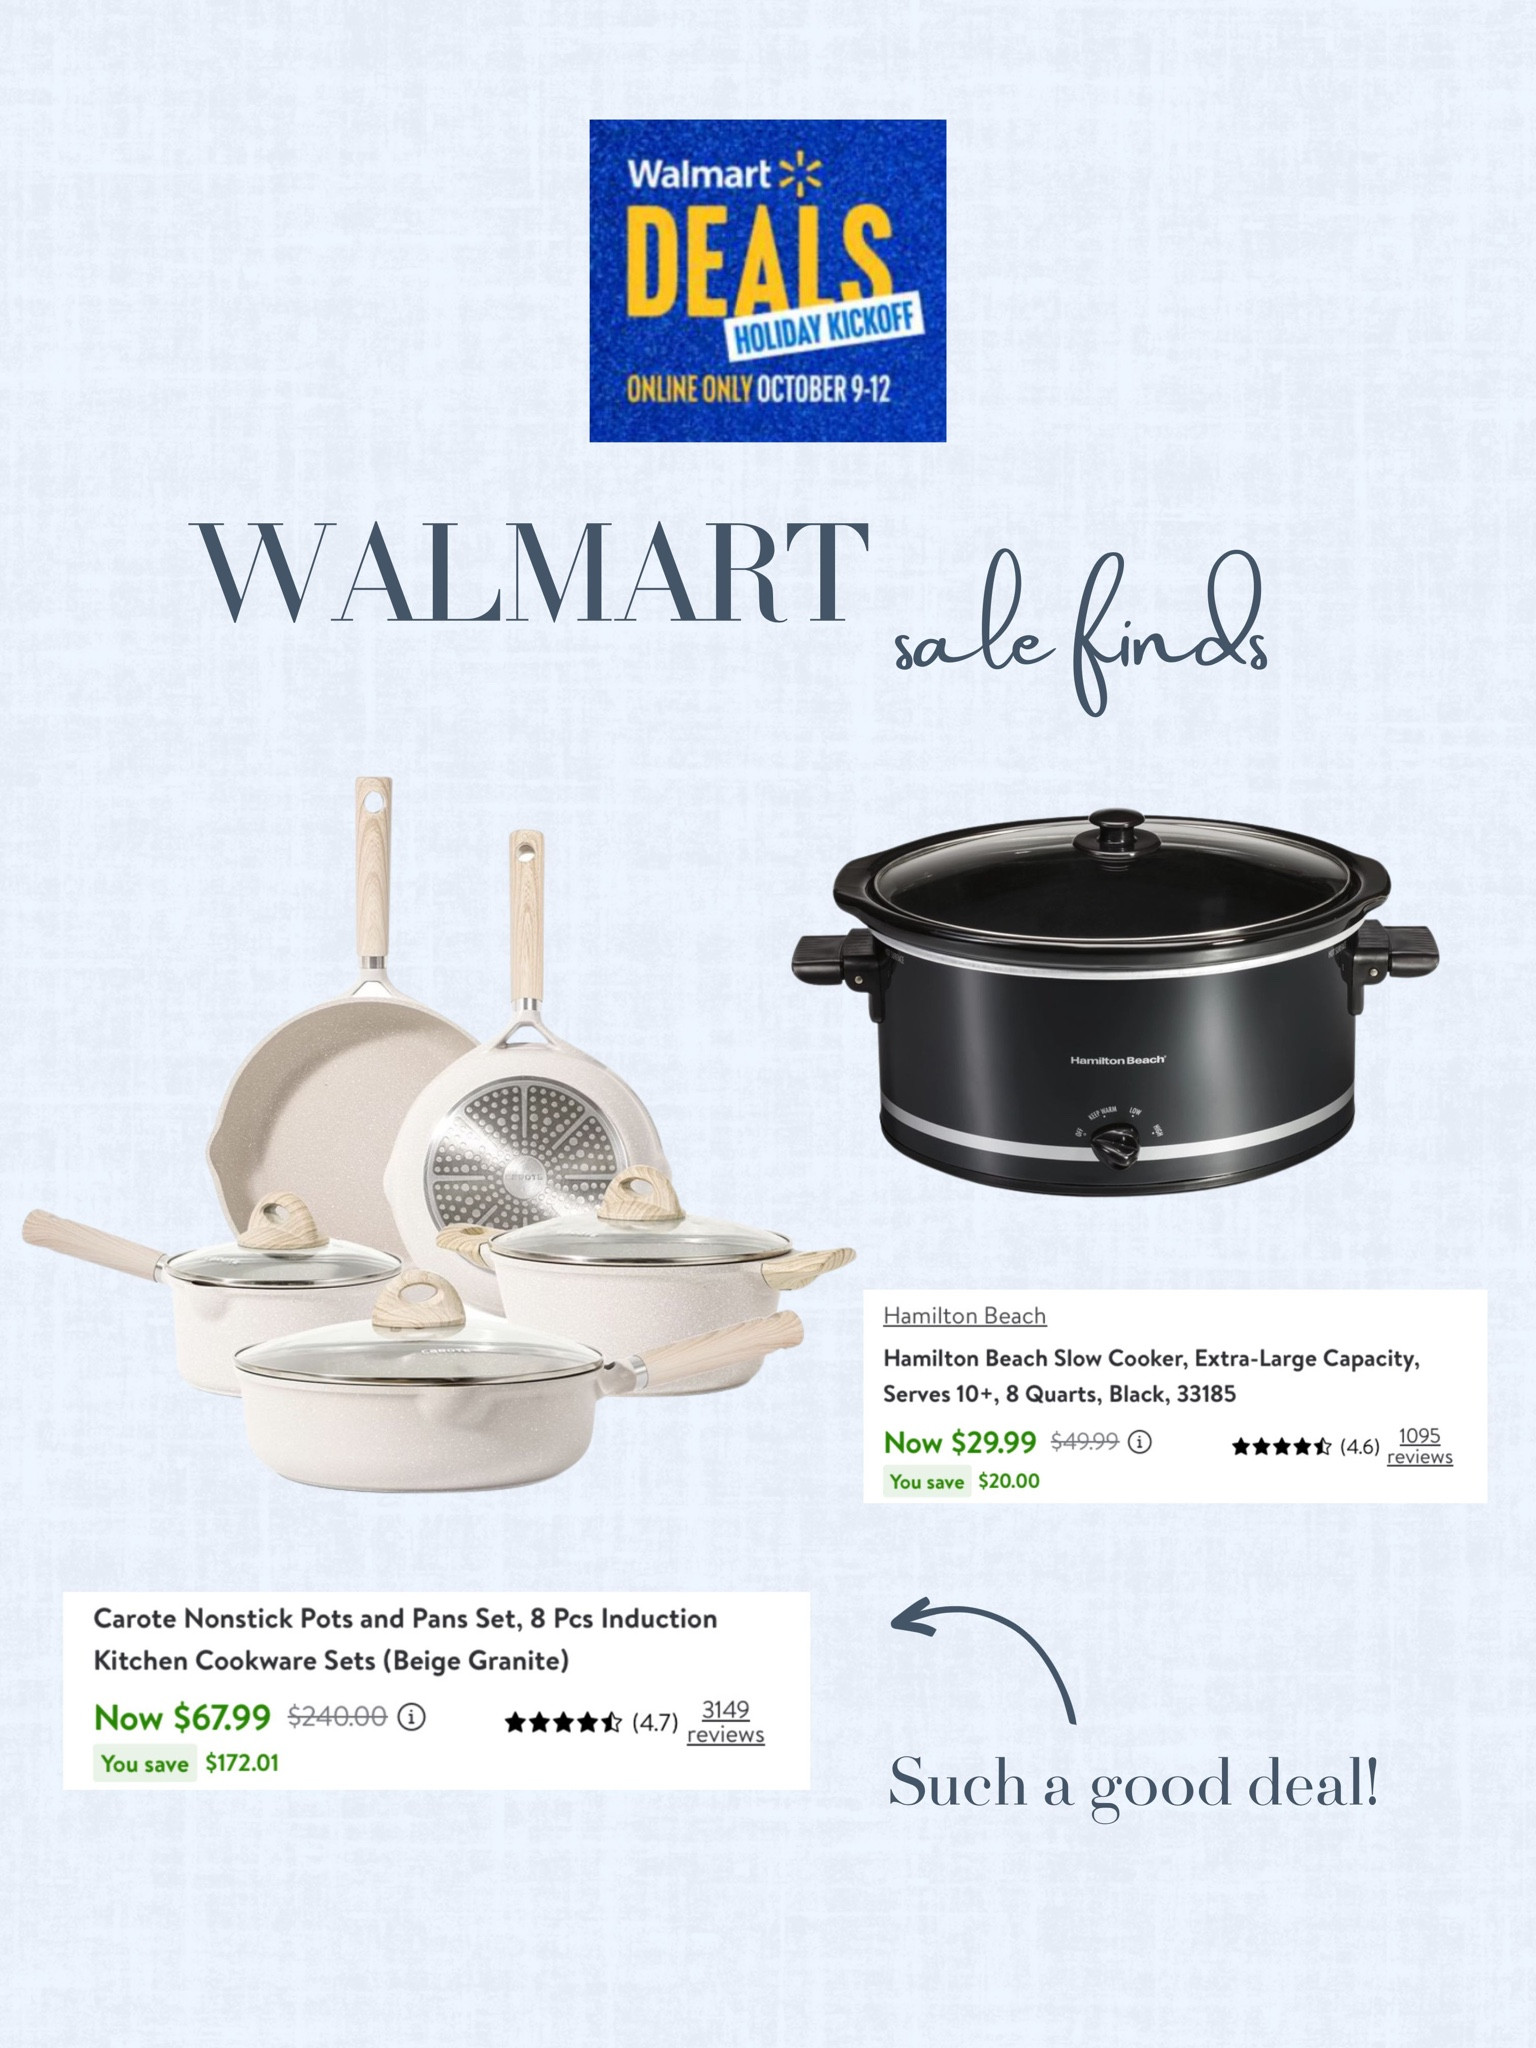 Carote Nonstick Pots and Pans Set, 8 Pcs Induction Kitchen Cookware Sets  (Beige Granite) - Walmart.com